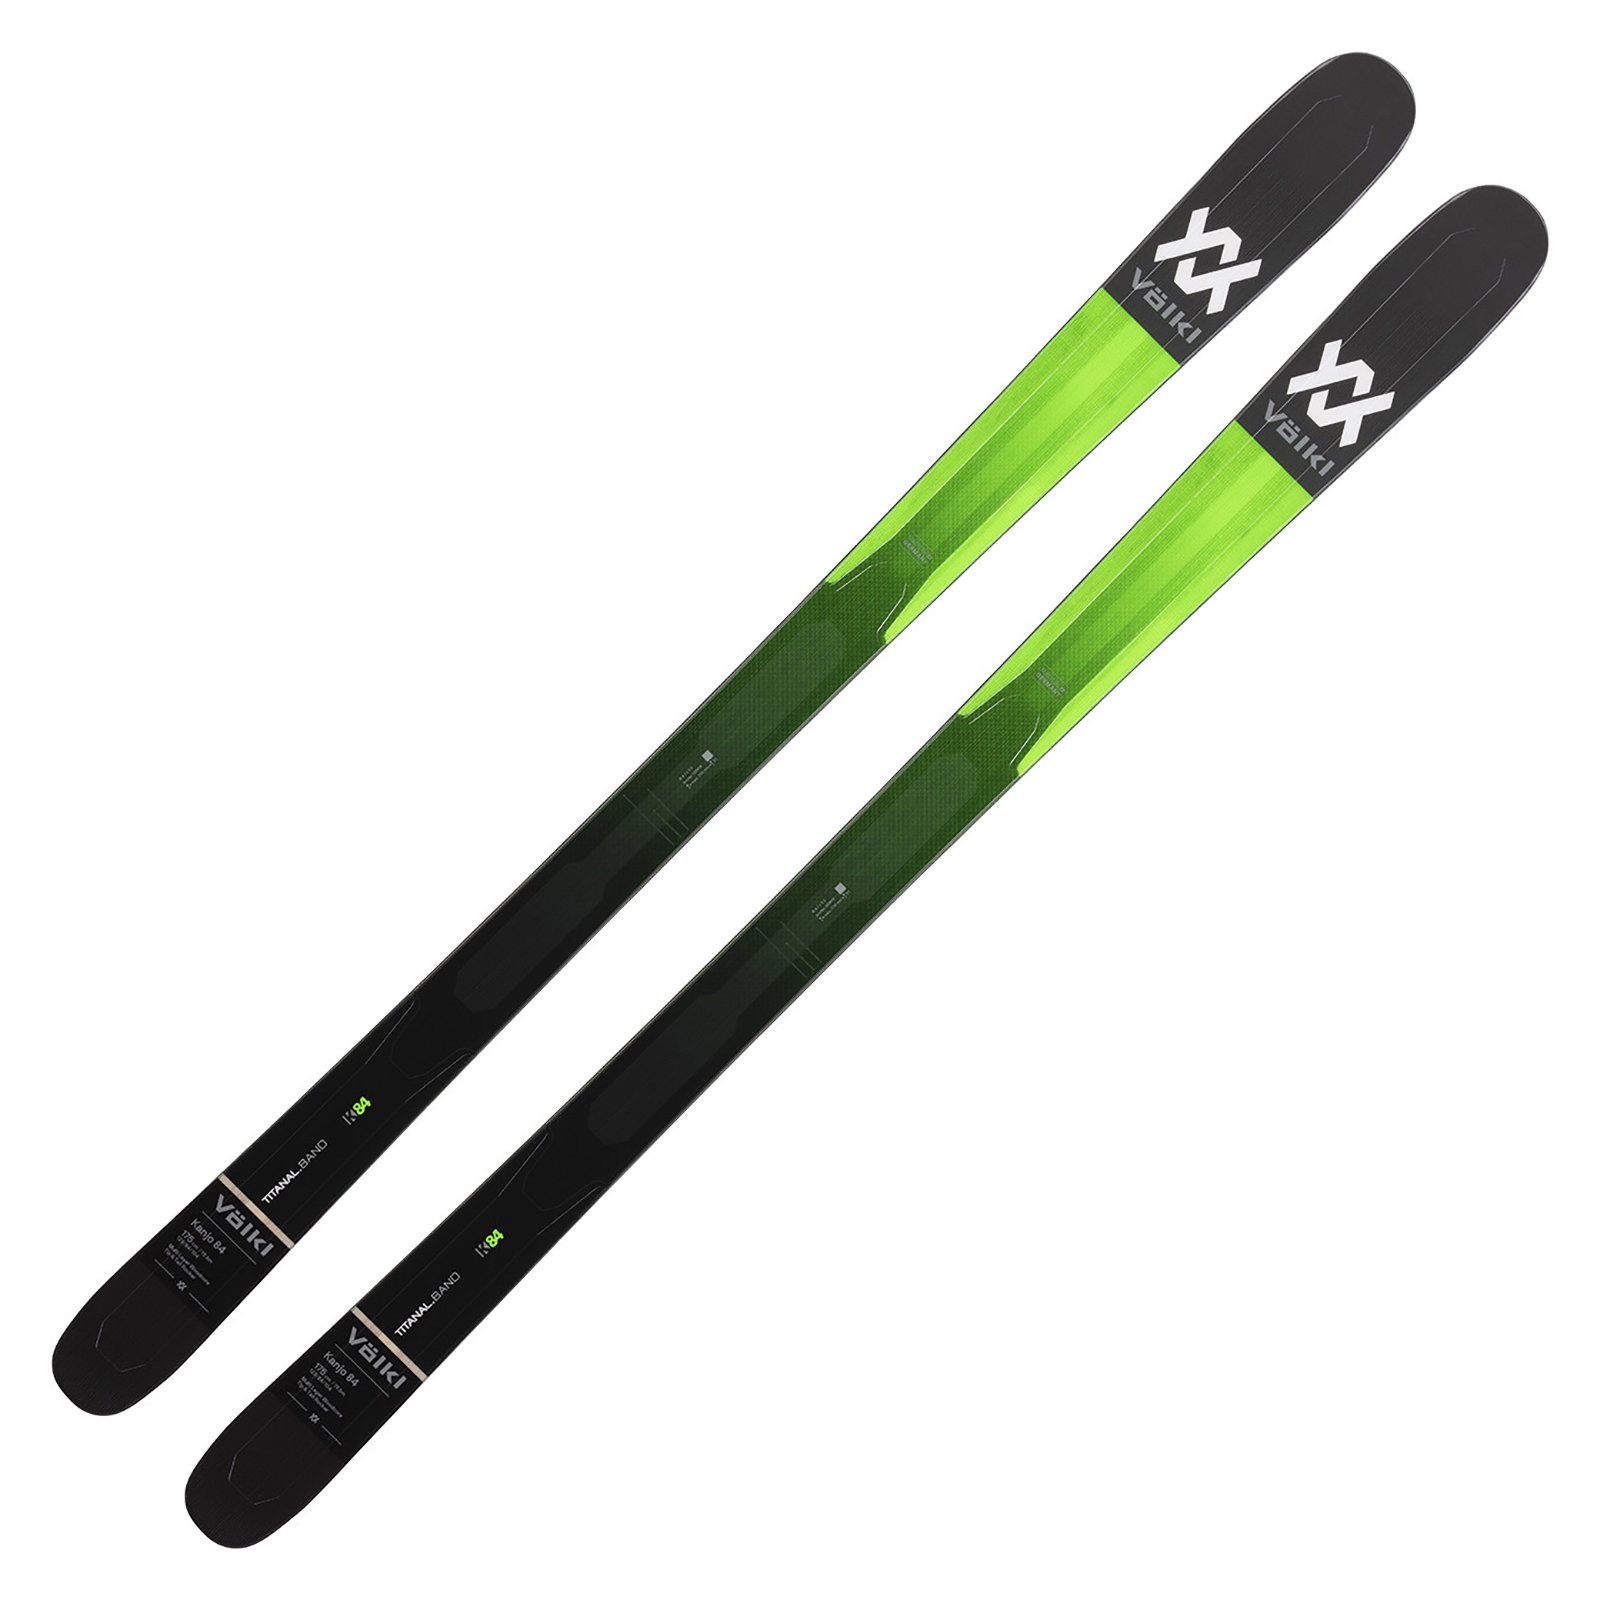 Völkl Kanjo 84 All-Mountain Ski "Testski" mit MARKER Griffon 13 TCX Demo